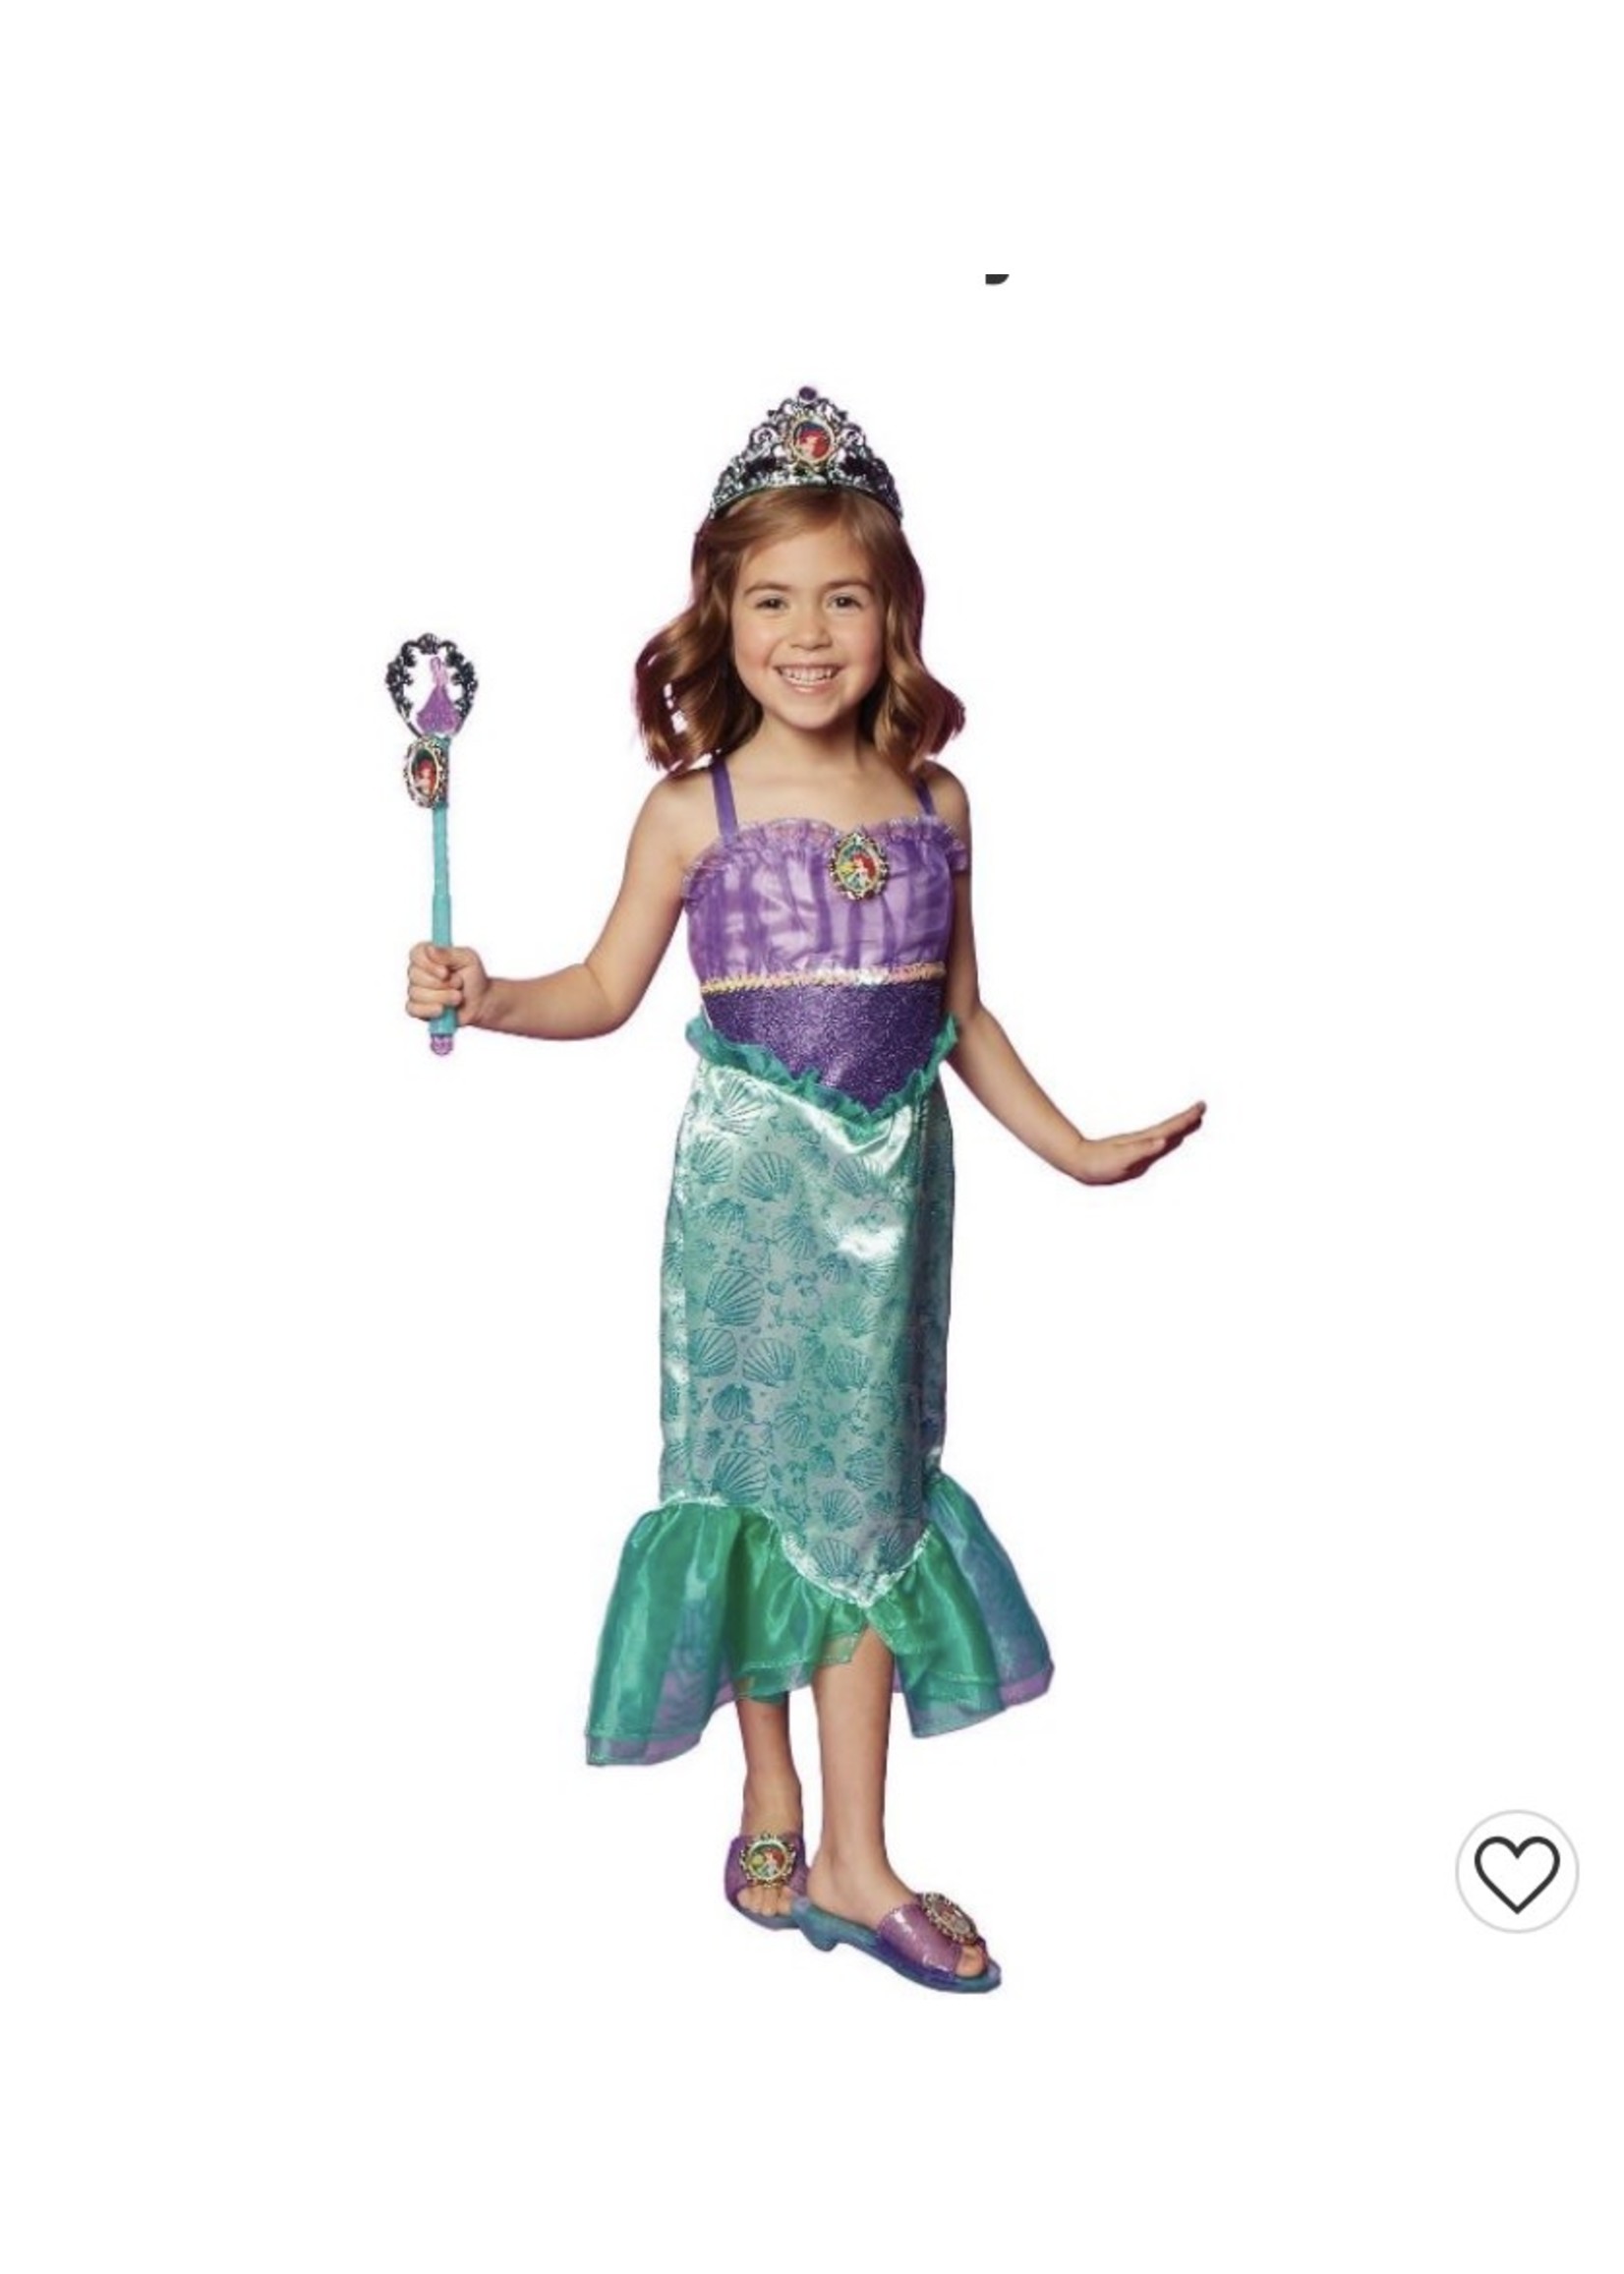 Disney Princess Ariel Accessory Set *missing wand* *no costume*